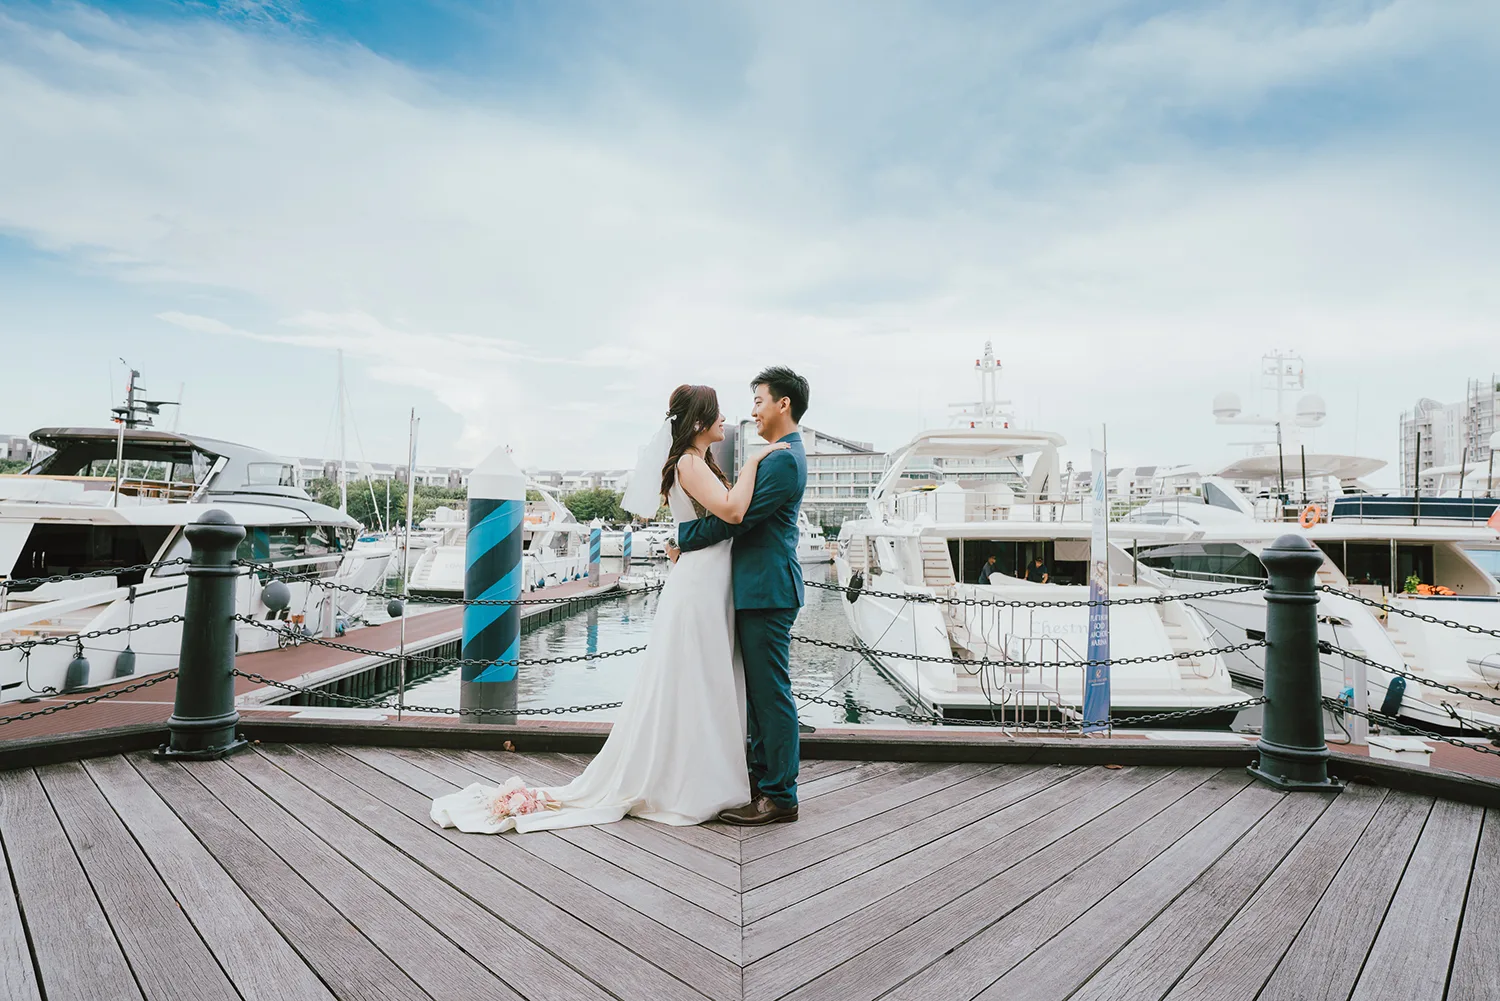 Pre-wedding photoshoot at Sentosa Cove, Singapore